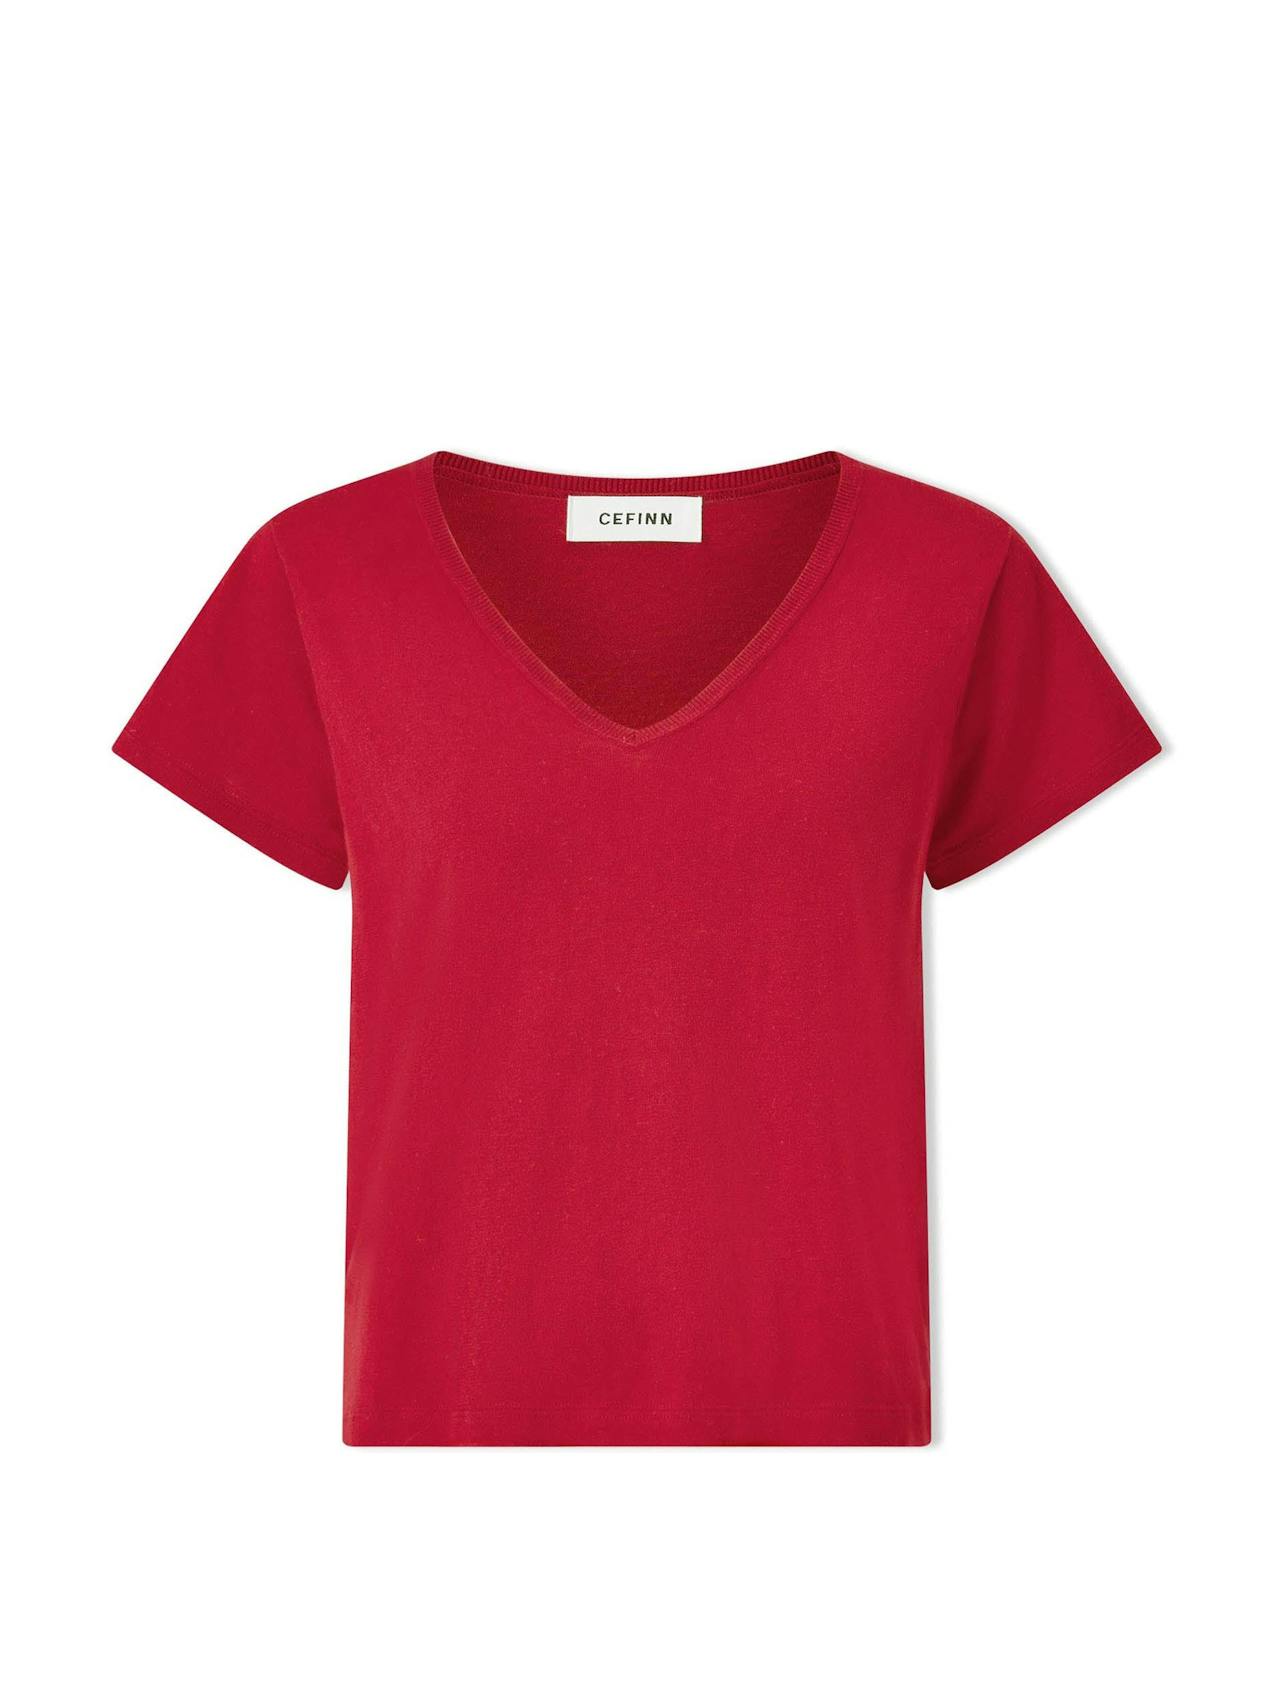 Red Madison linen blend v neck knit t-shirt